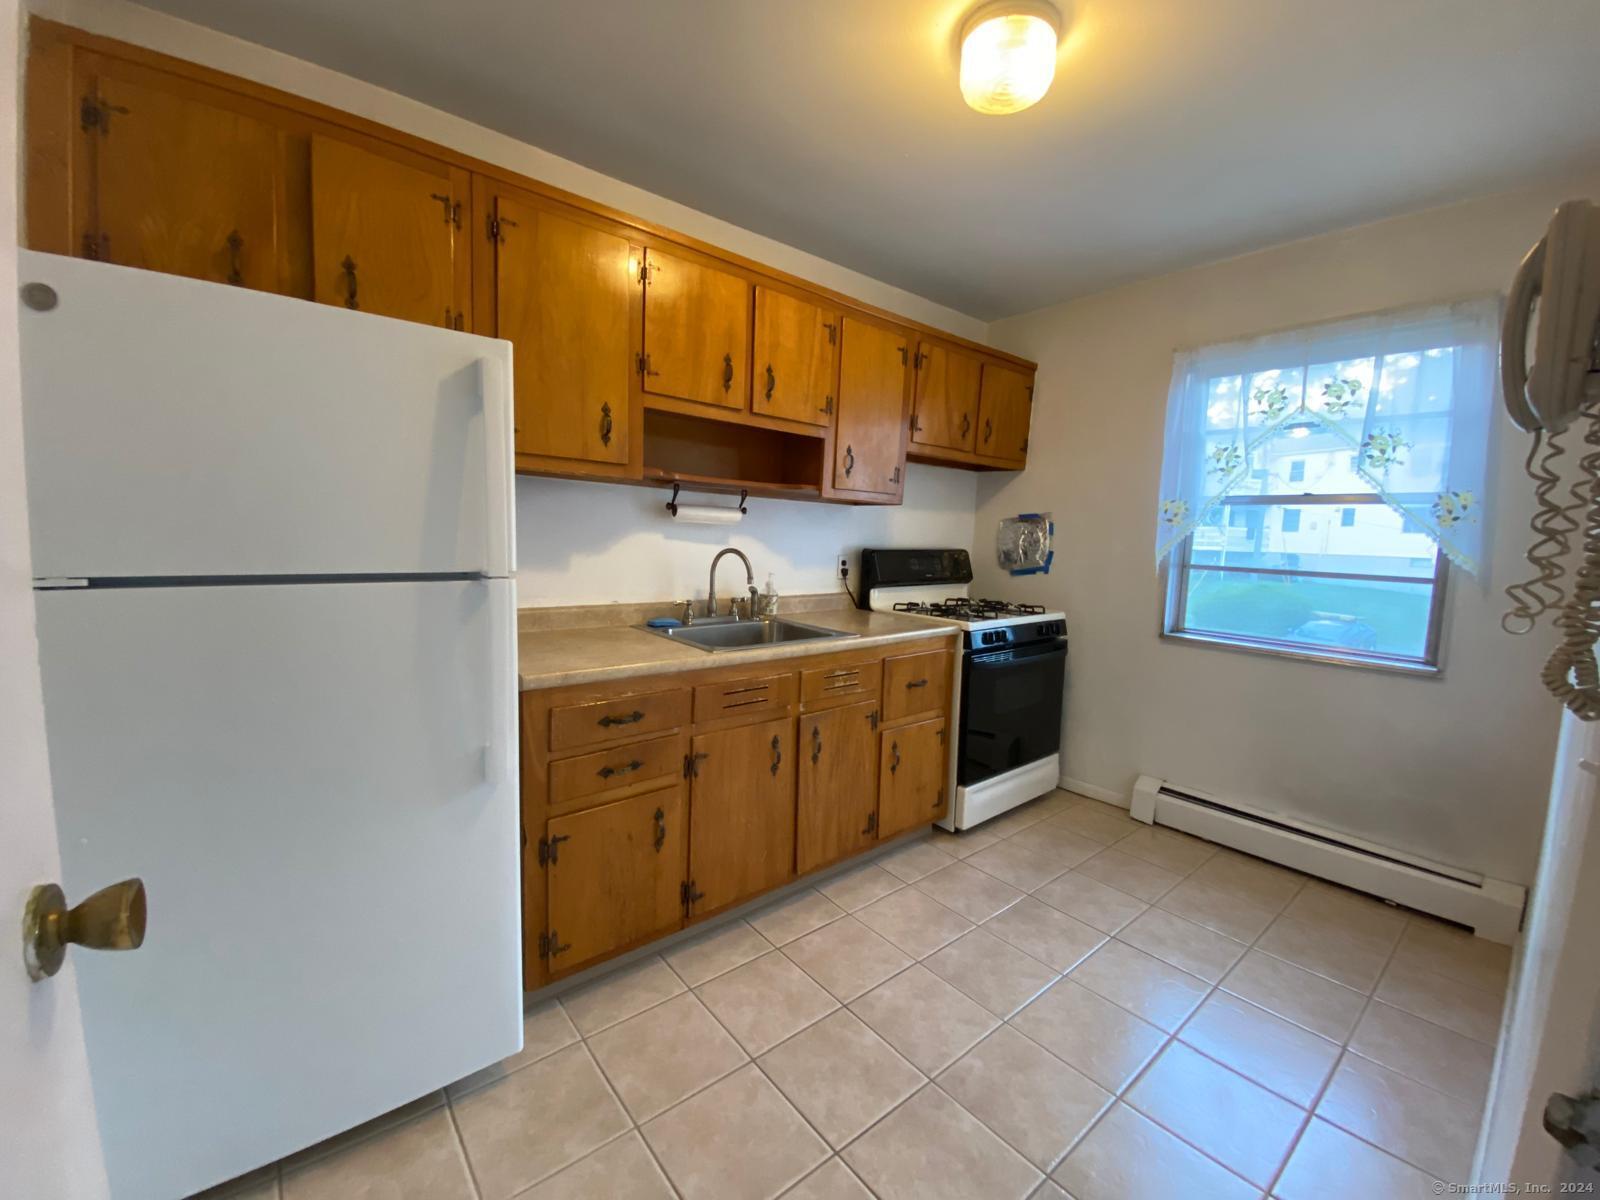 Rental Property at 18 Fairview Drive Apt 3, Danbury, Connecticut - Bedrooms: 2 
Bathrooms: 1 
Rooms: 4  - $2,100 MO.